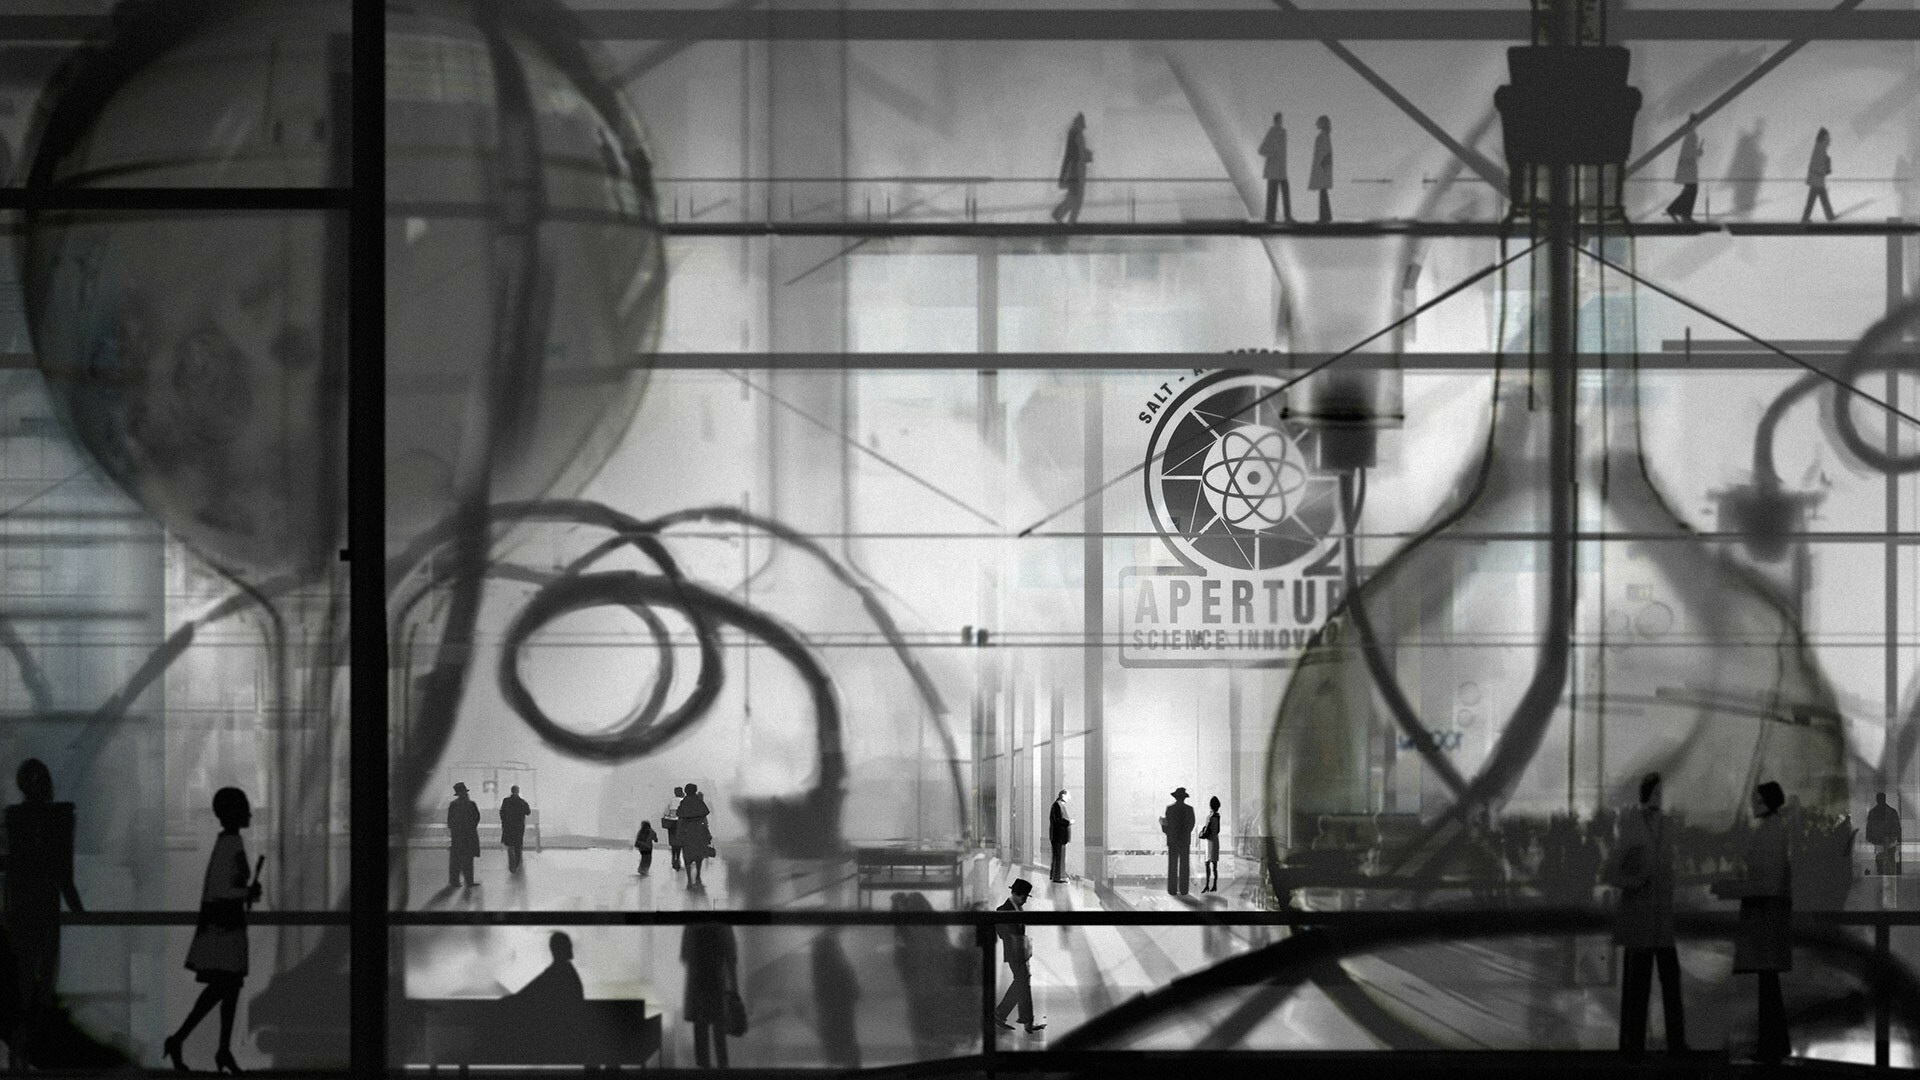 Portal 2 (Game): Glados, Aperture Laboratories, Valve Corporation, Black-and-white. 1920x1080 Full HD Wallpaper.